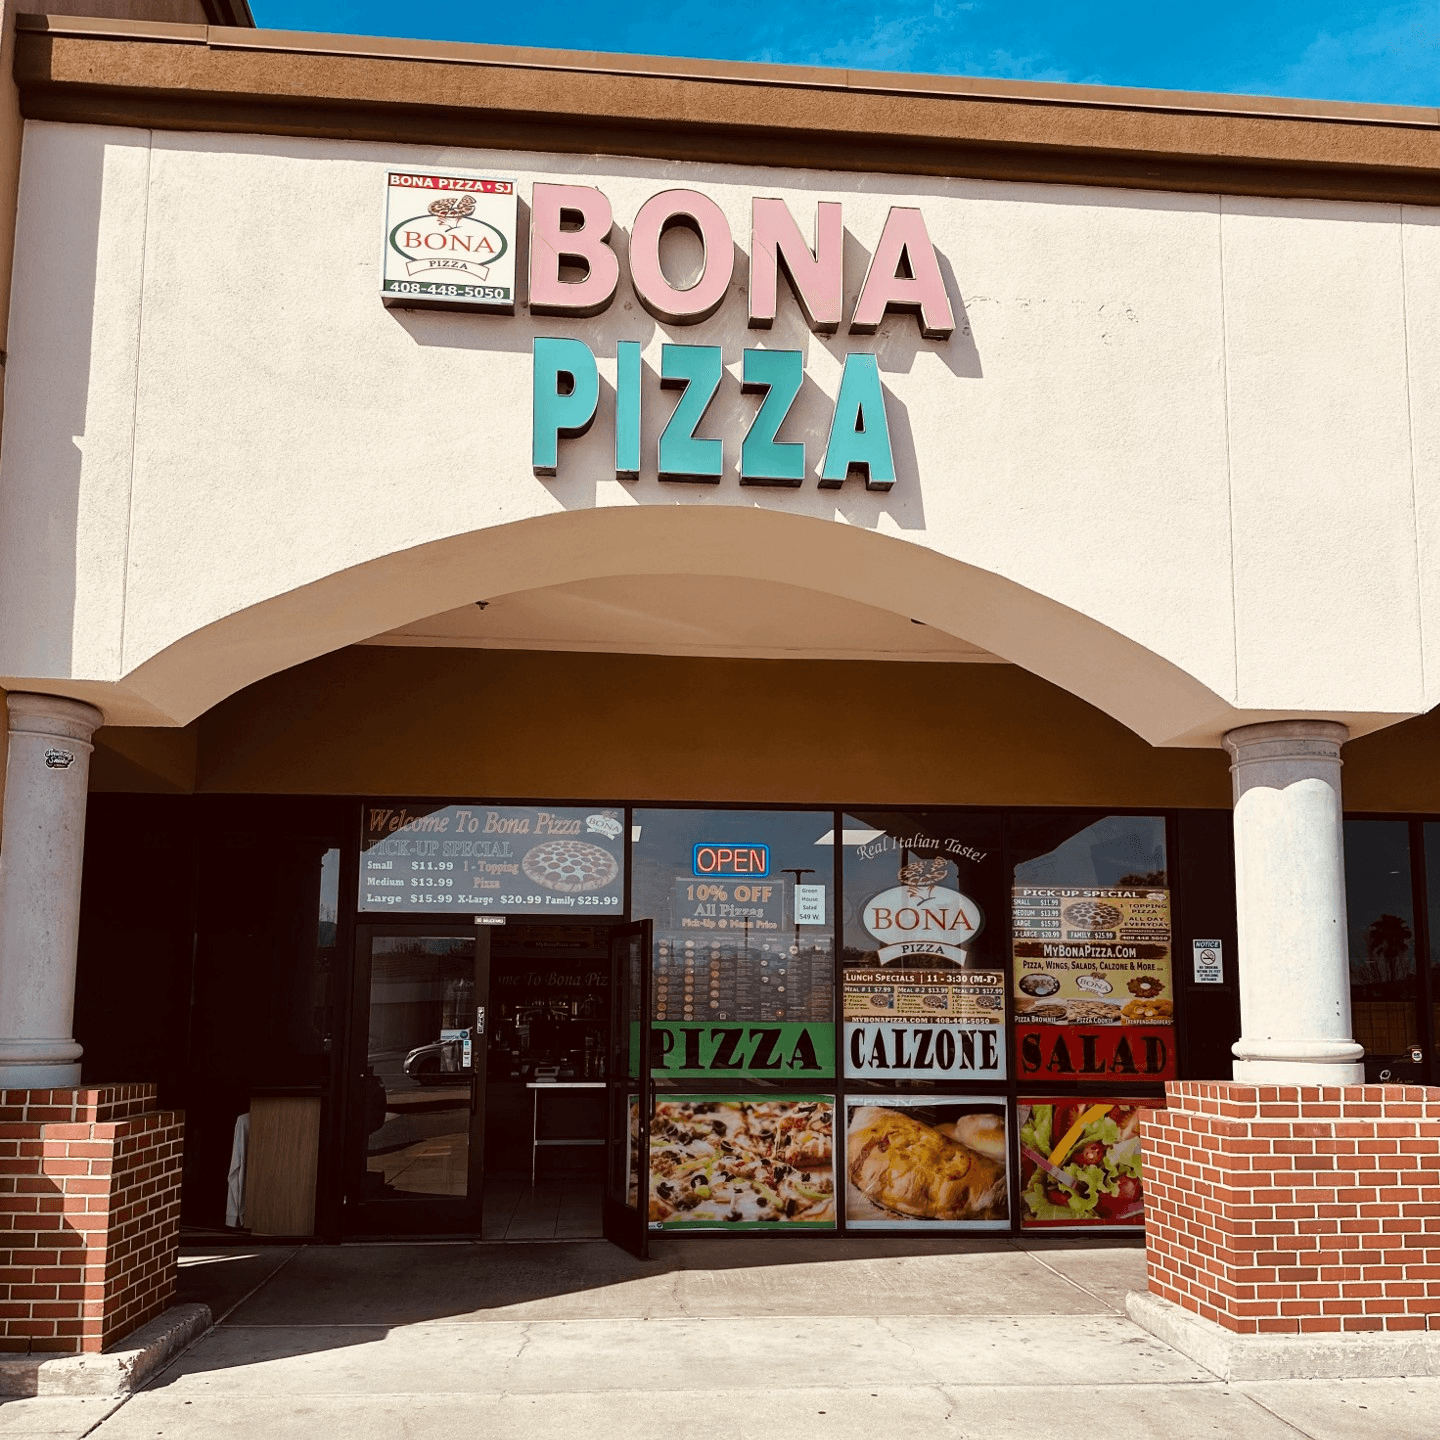 Welcome to Bona Pizza!